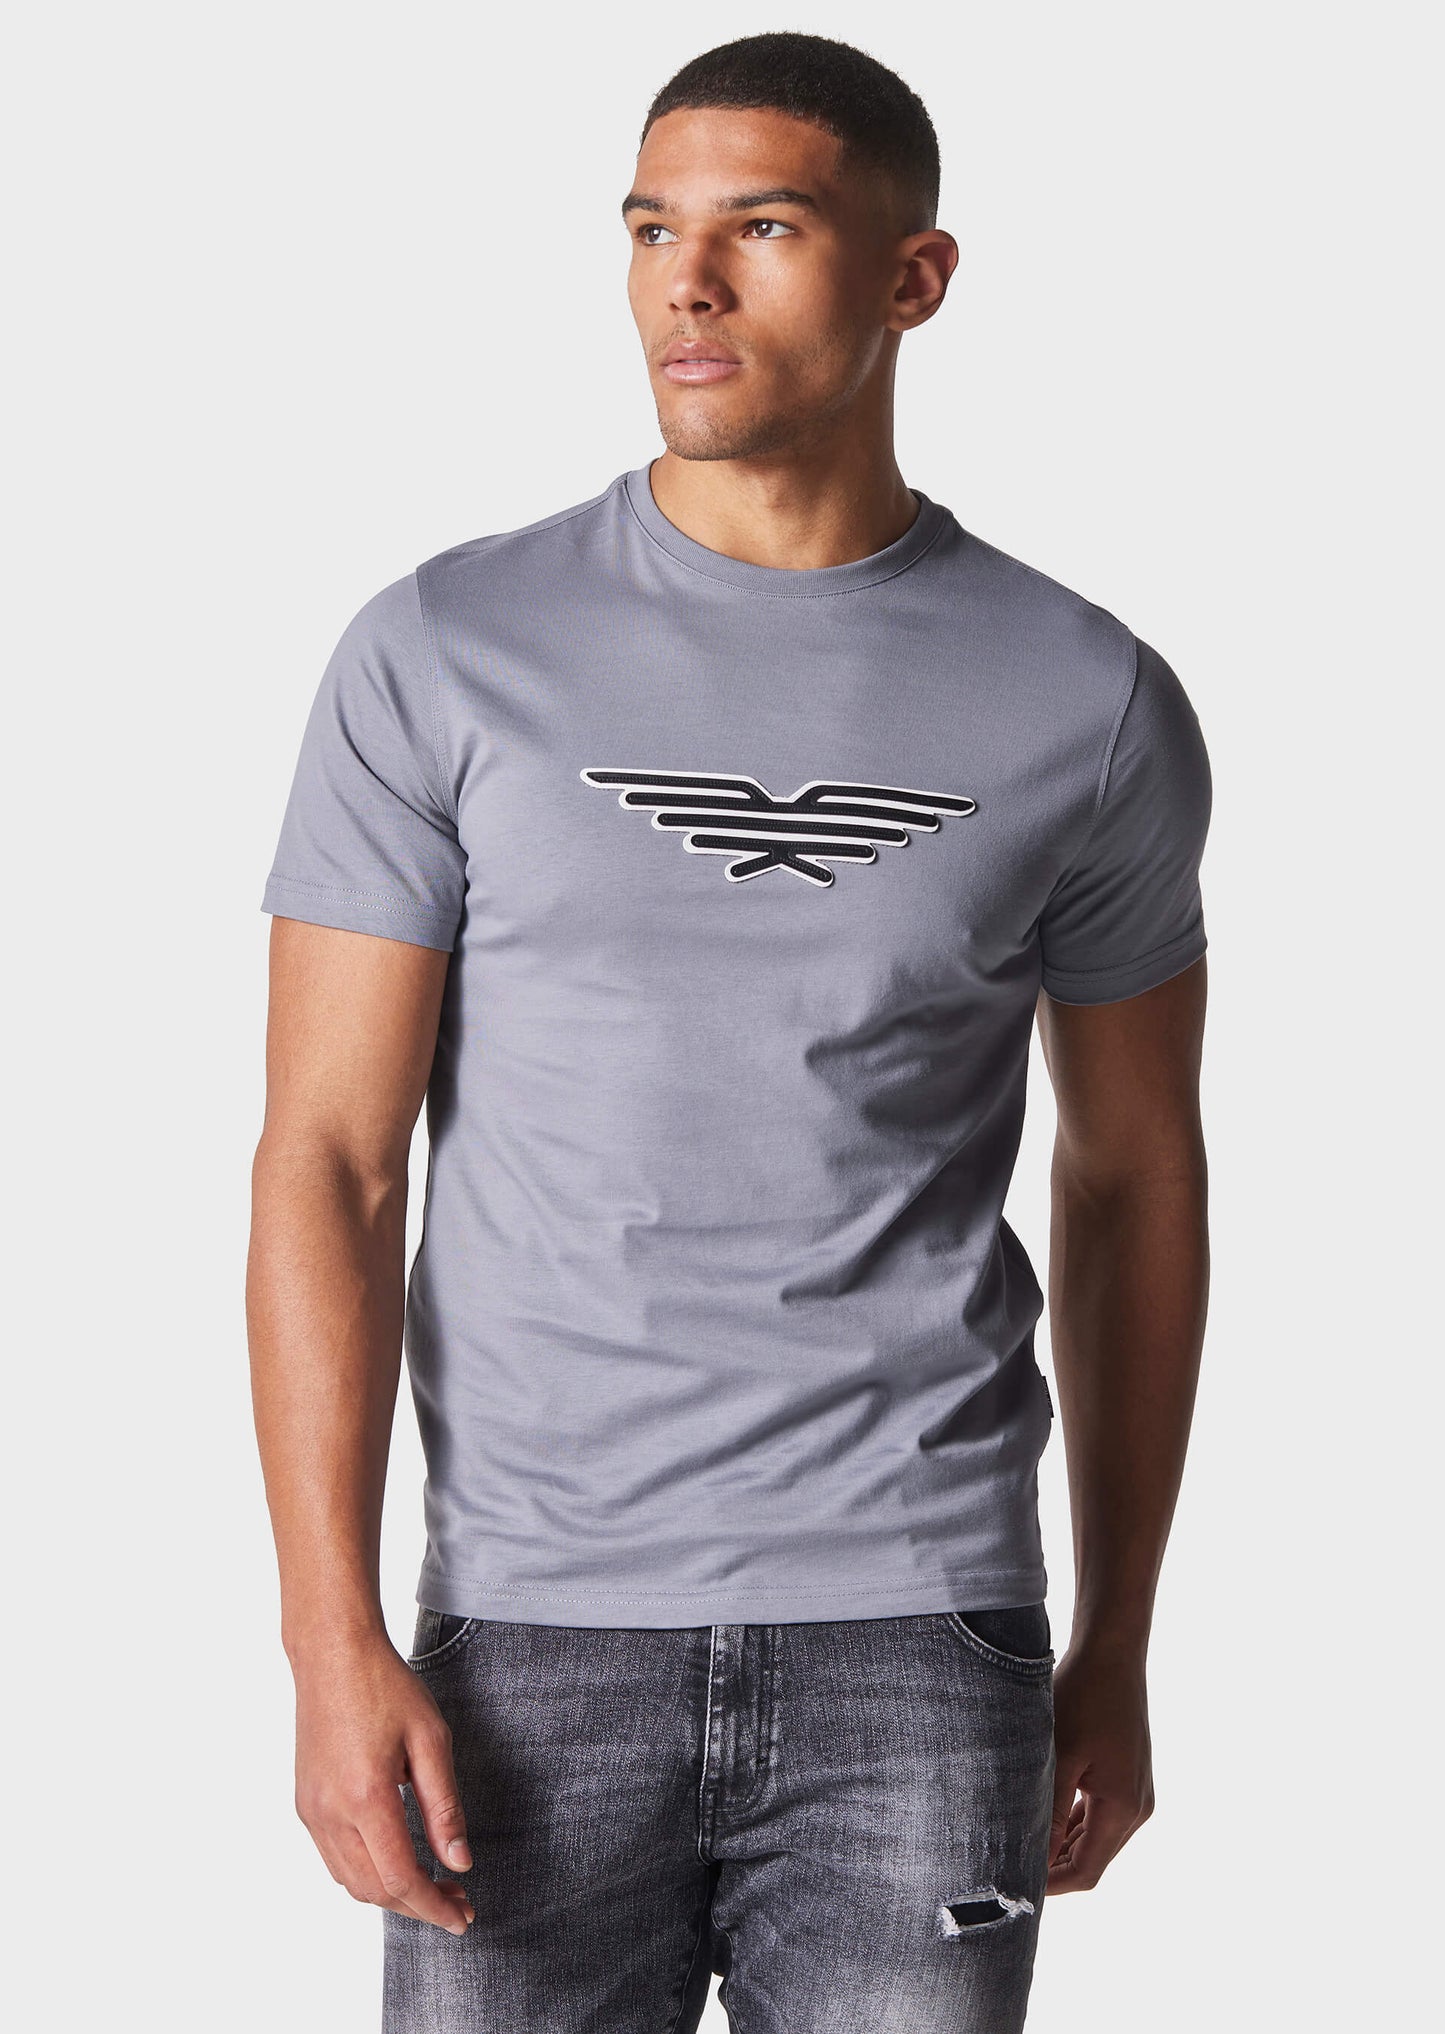 Foaks Stone Grey T-Shirt